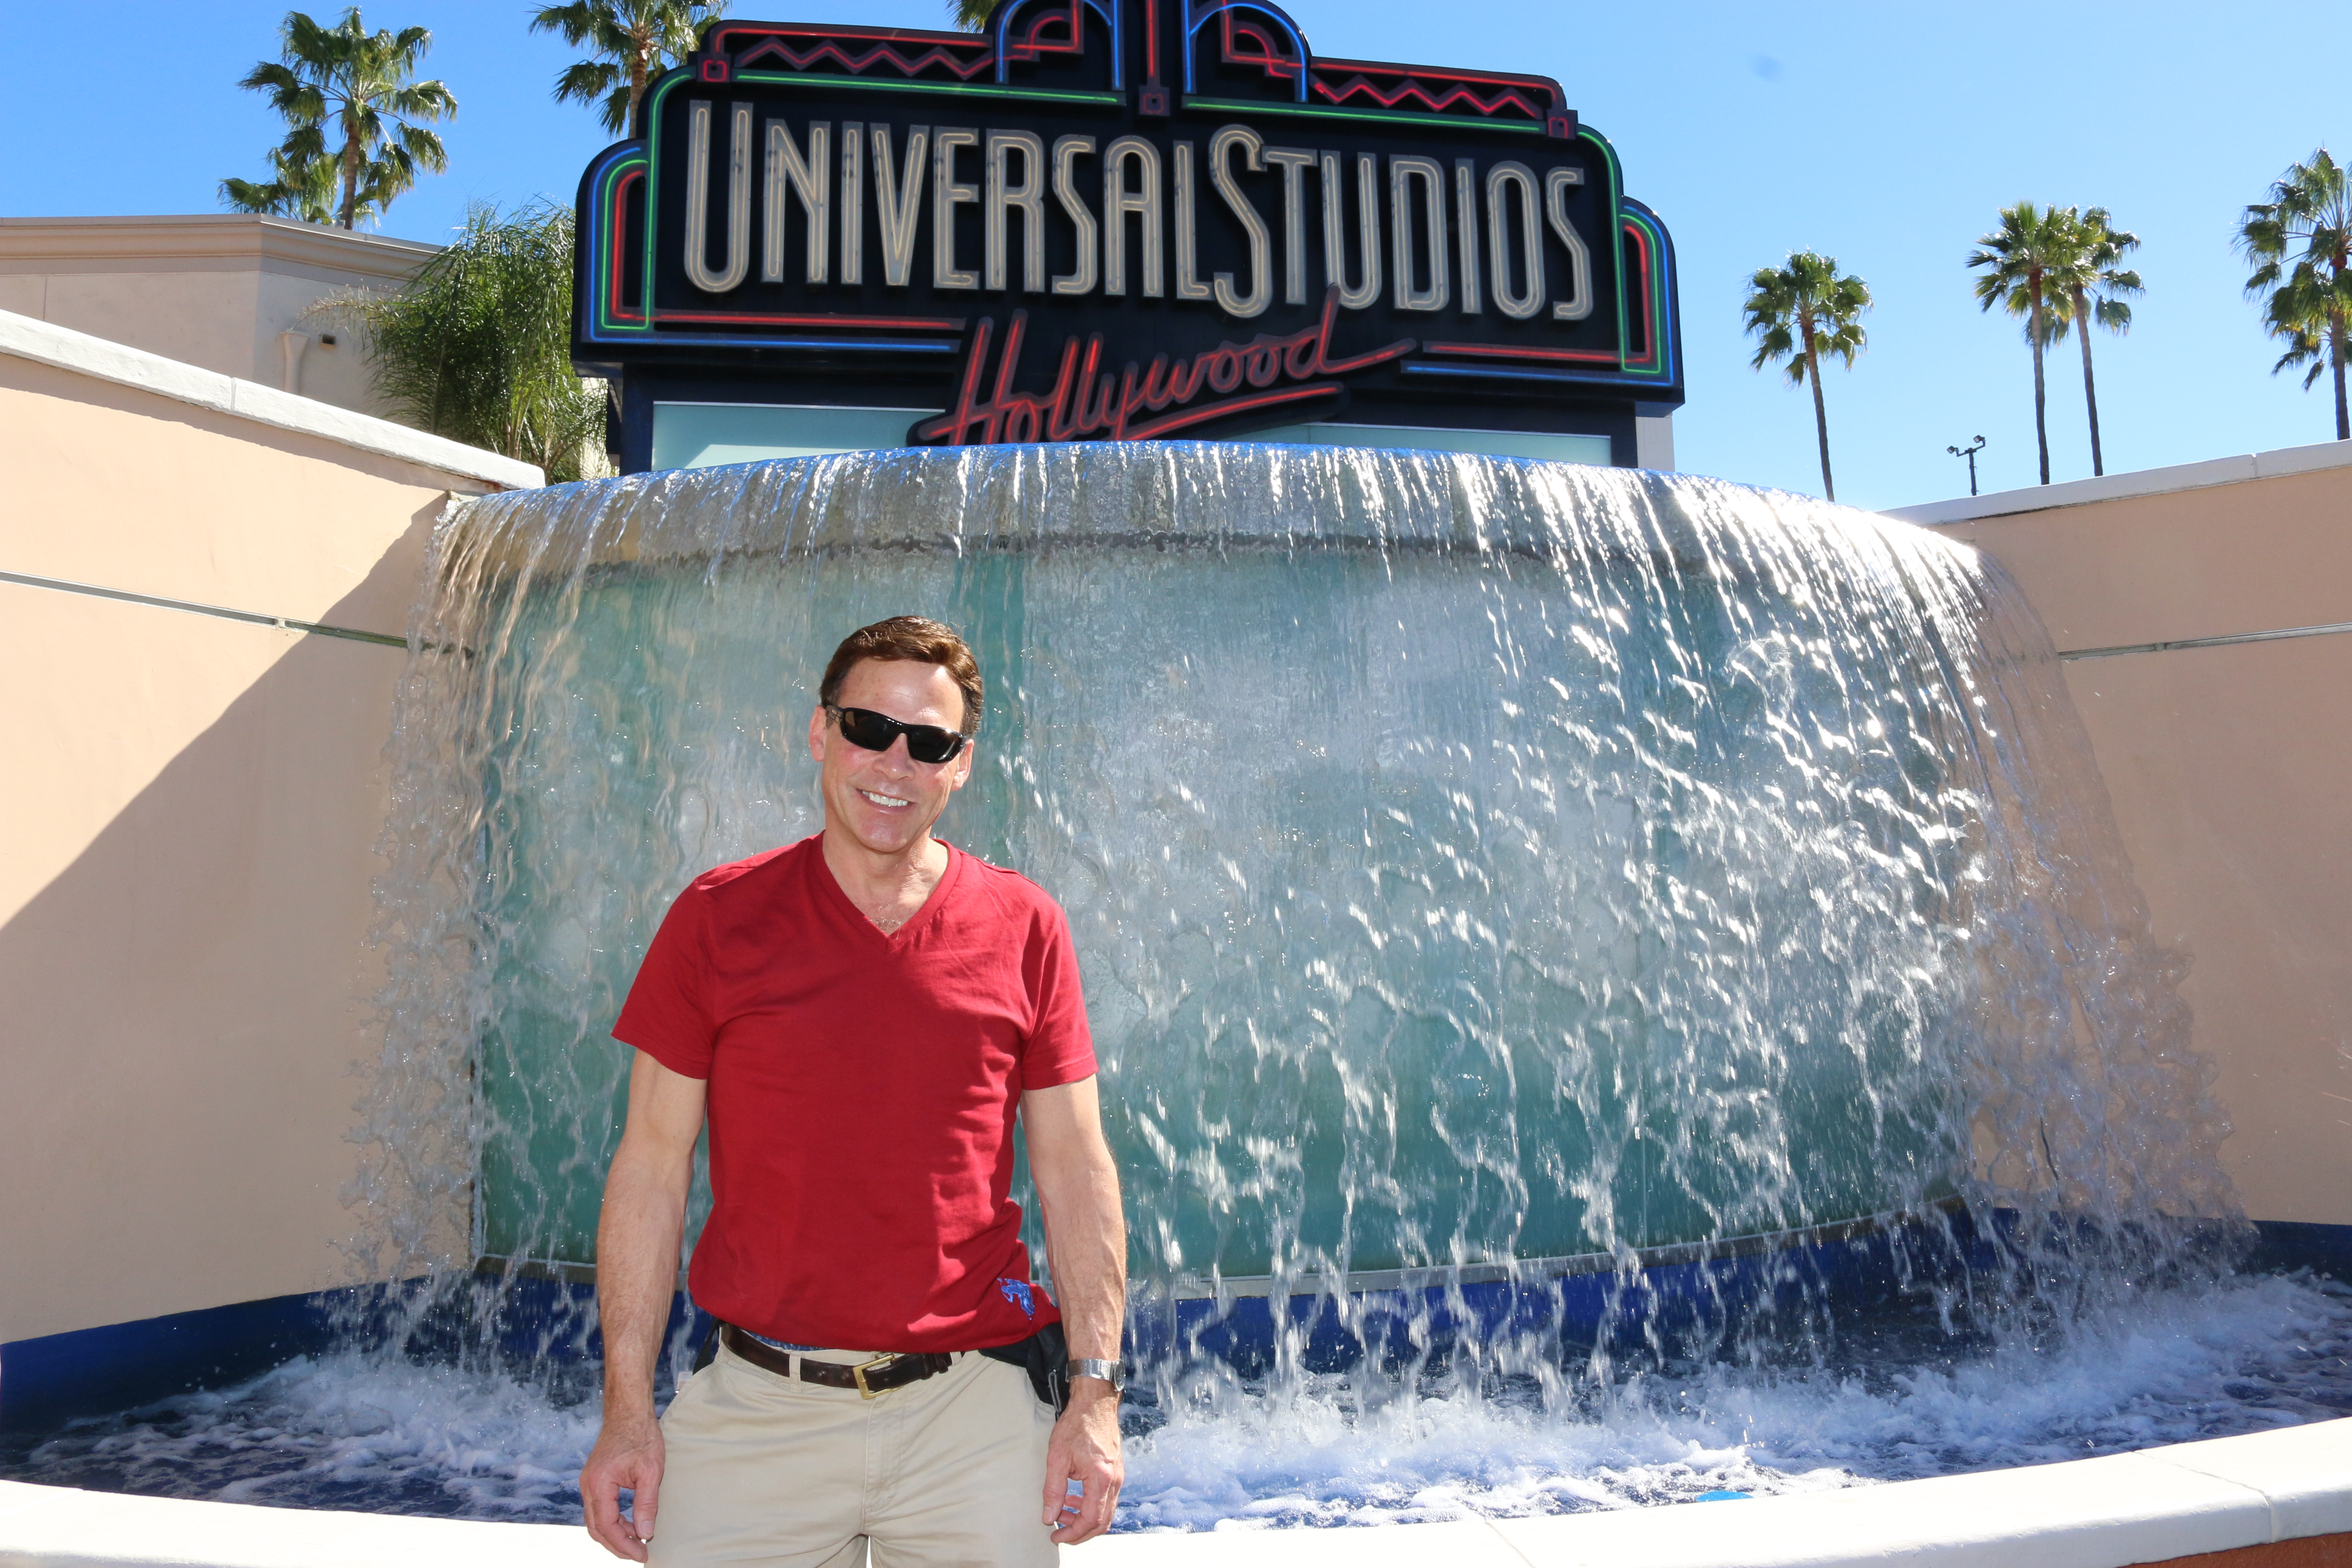 Universal Studios Hollywood 2015